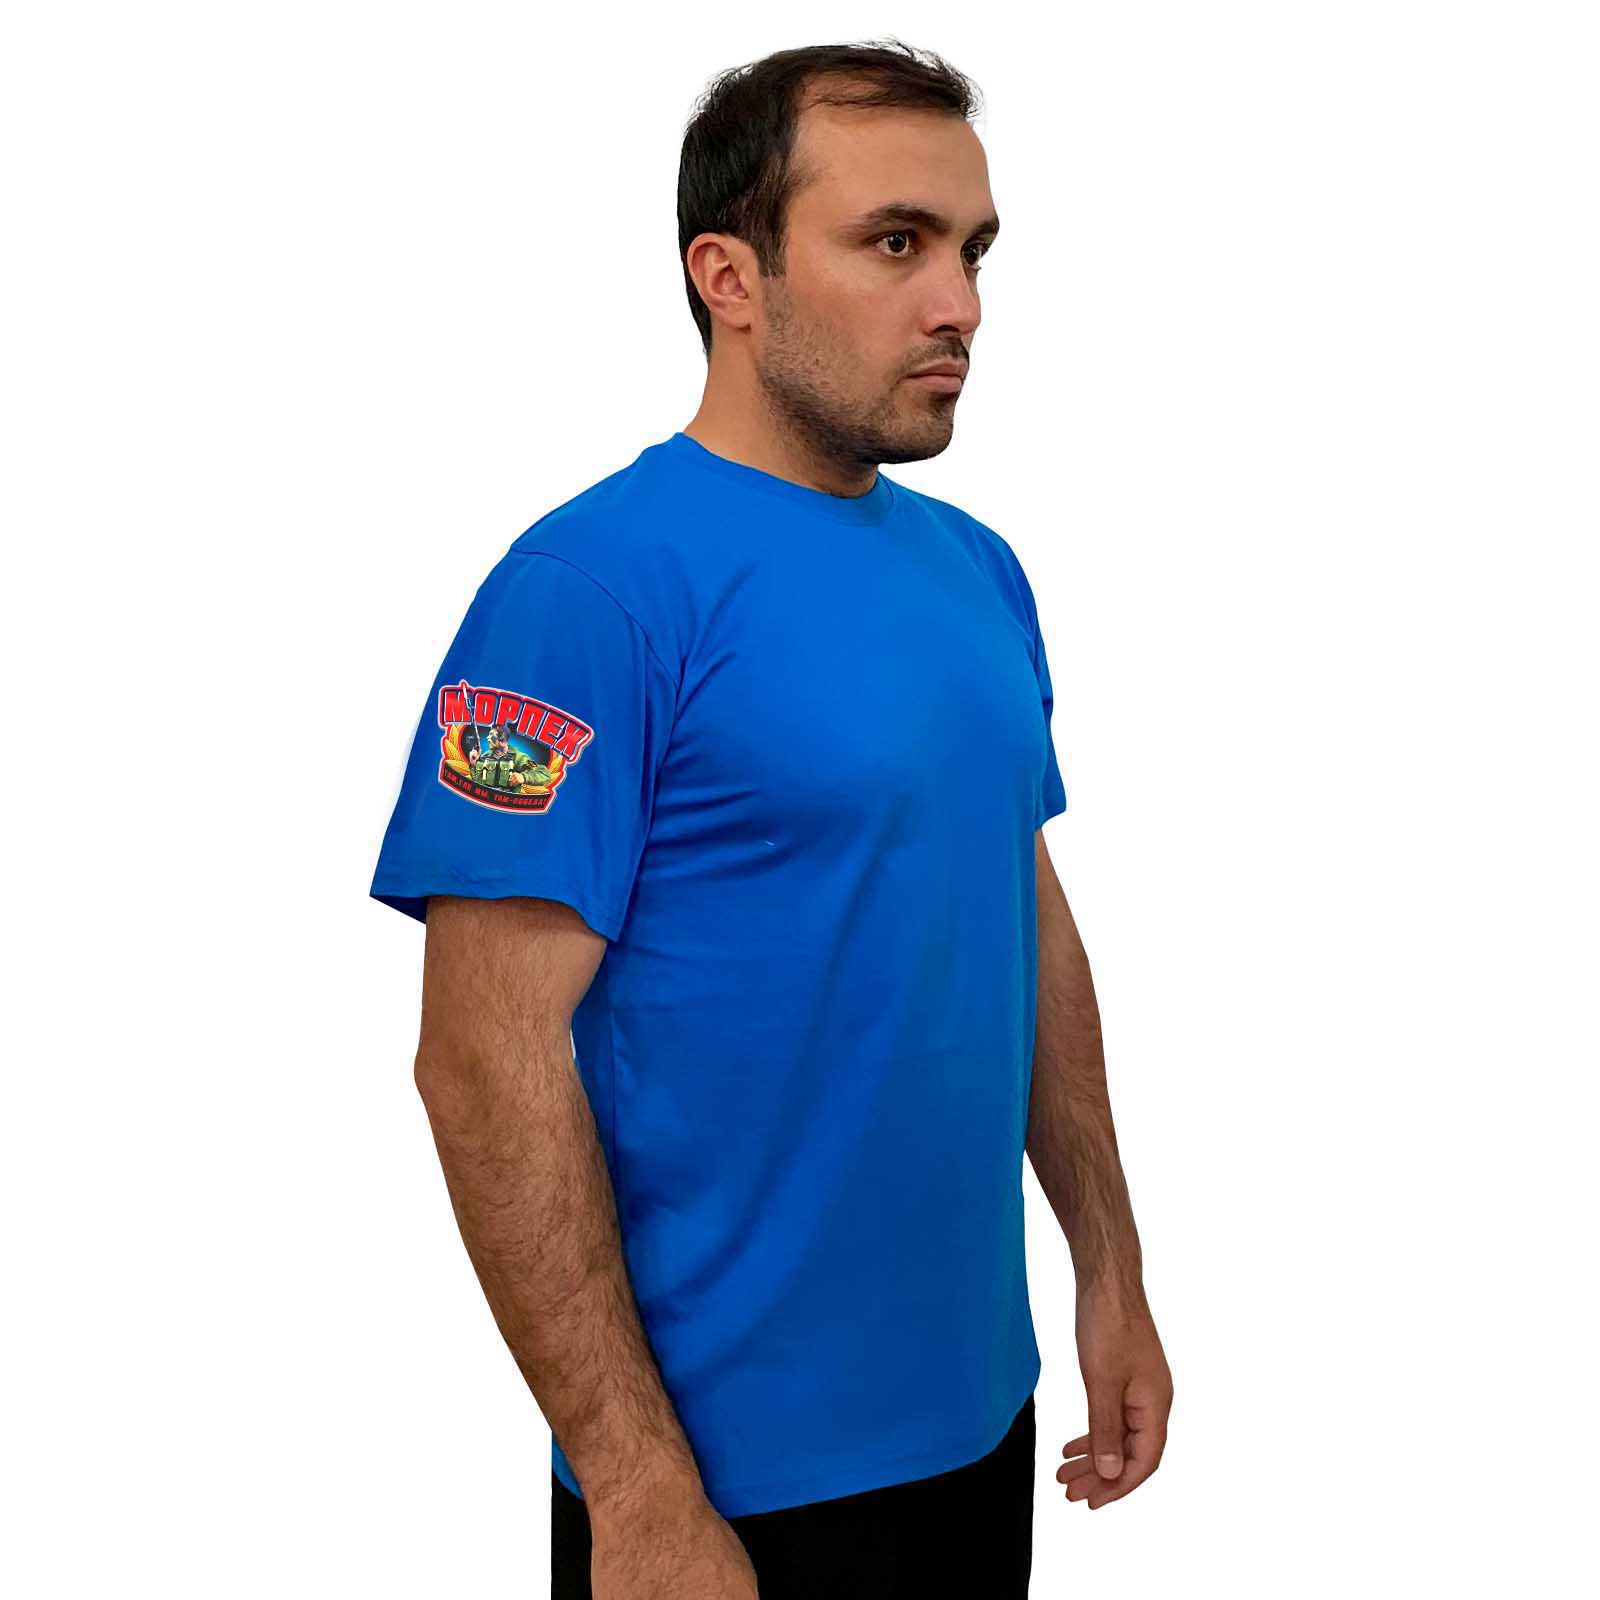 Васильковая футболка с термотрансфером "Морпех" на рукаве